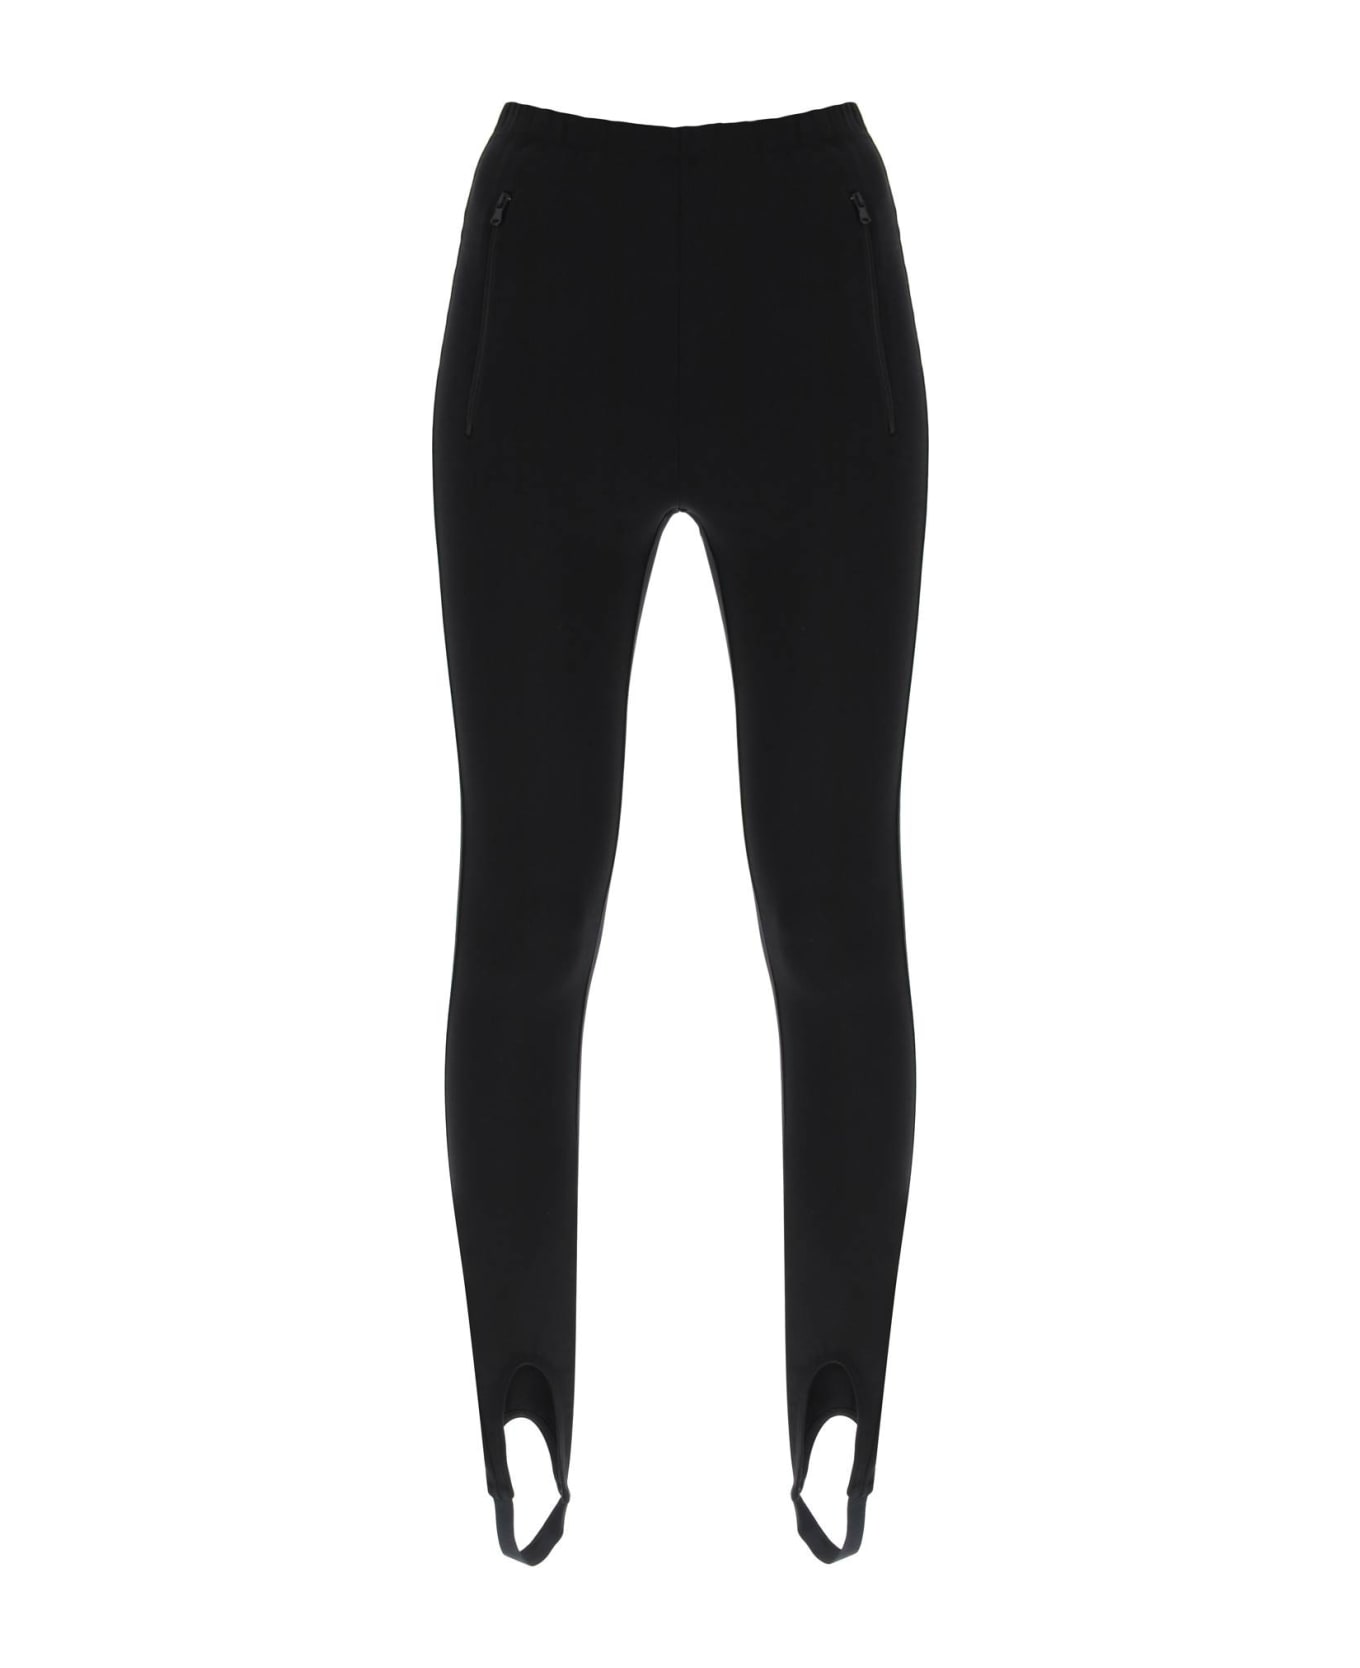 WARDROBE.NYC High-waisted Stirrup Leggings - BLACK (Black) レギンス